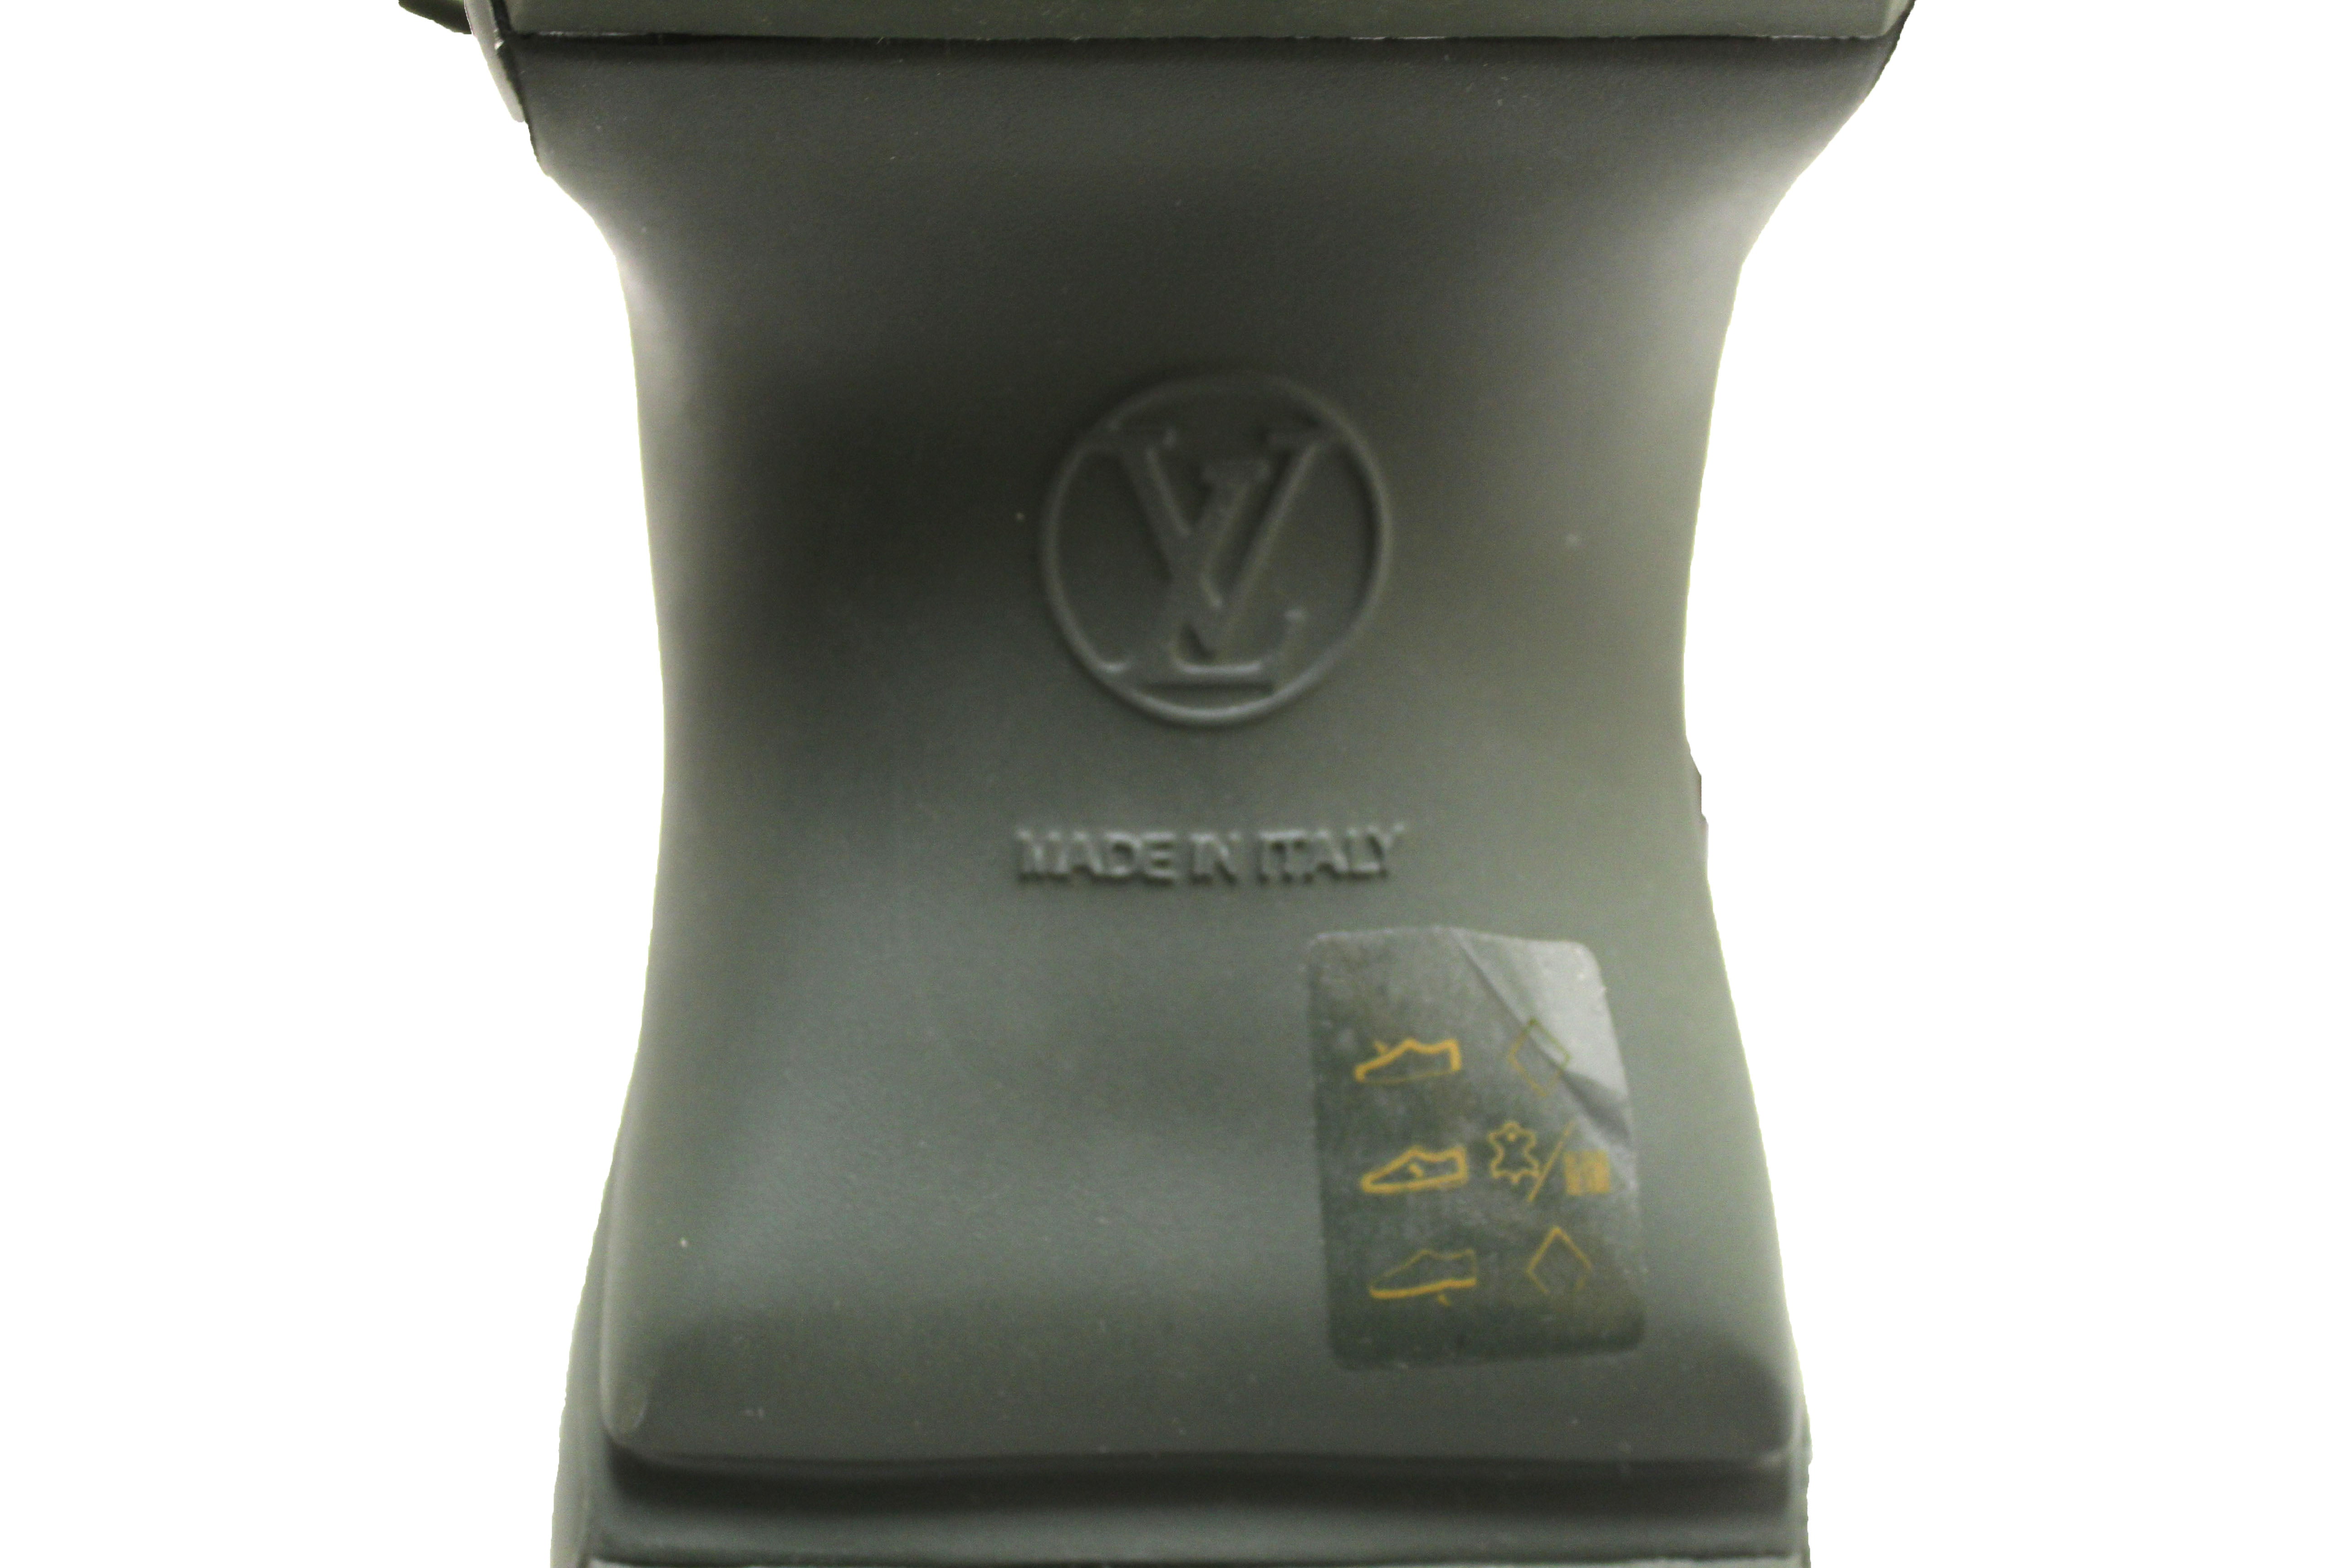 Authentic Louis Vuitton Khaki Green Mat Rubber Archlight Sneaker Boot Size 37